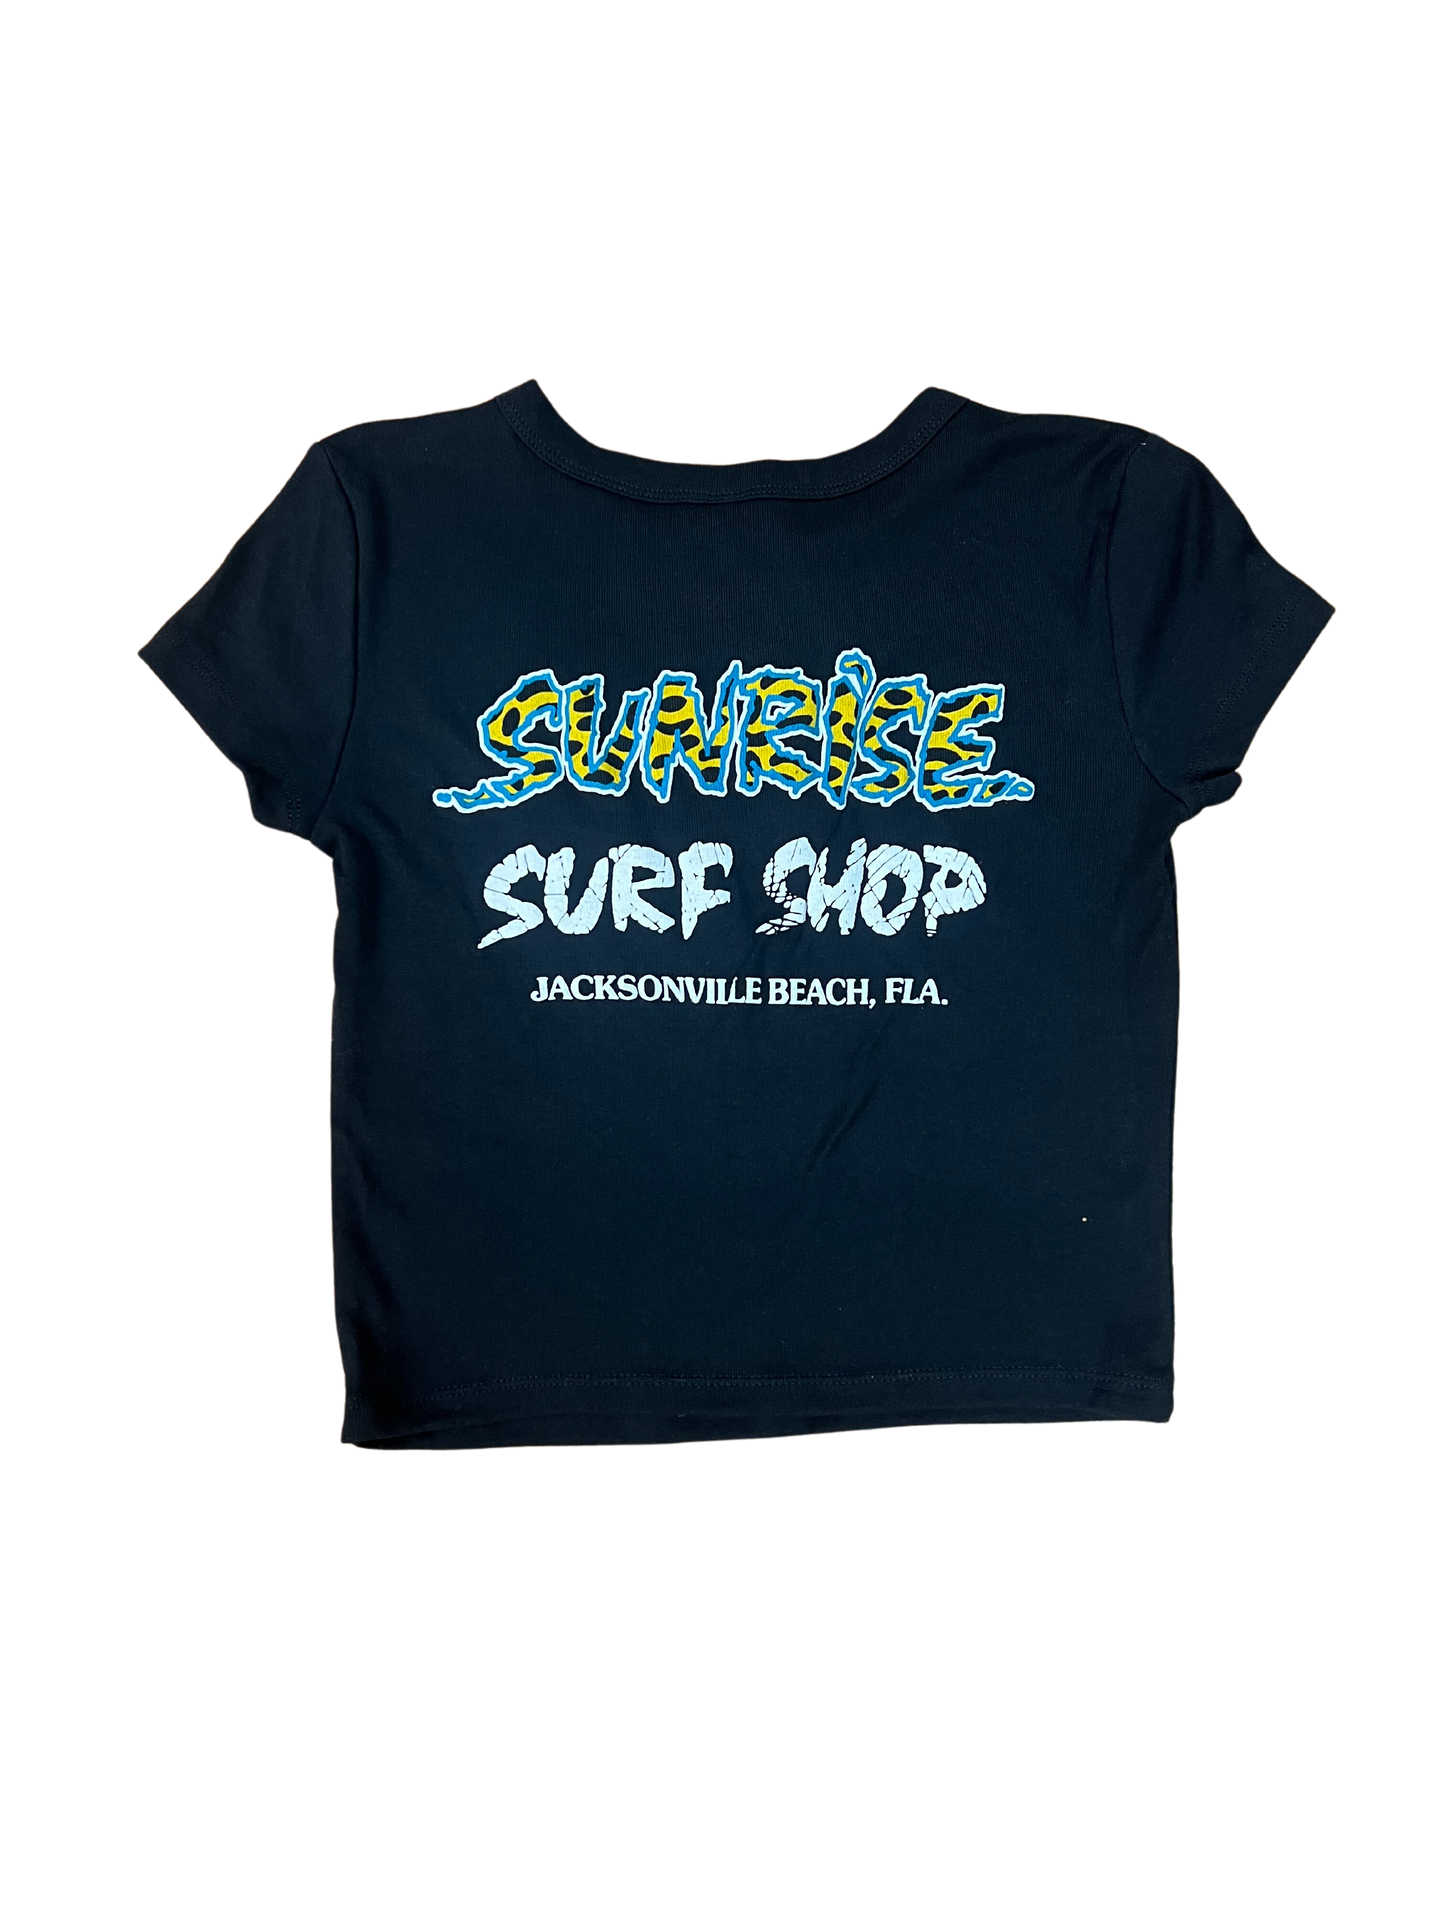 Sunrise Surf Shop Cropped Baby Tee